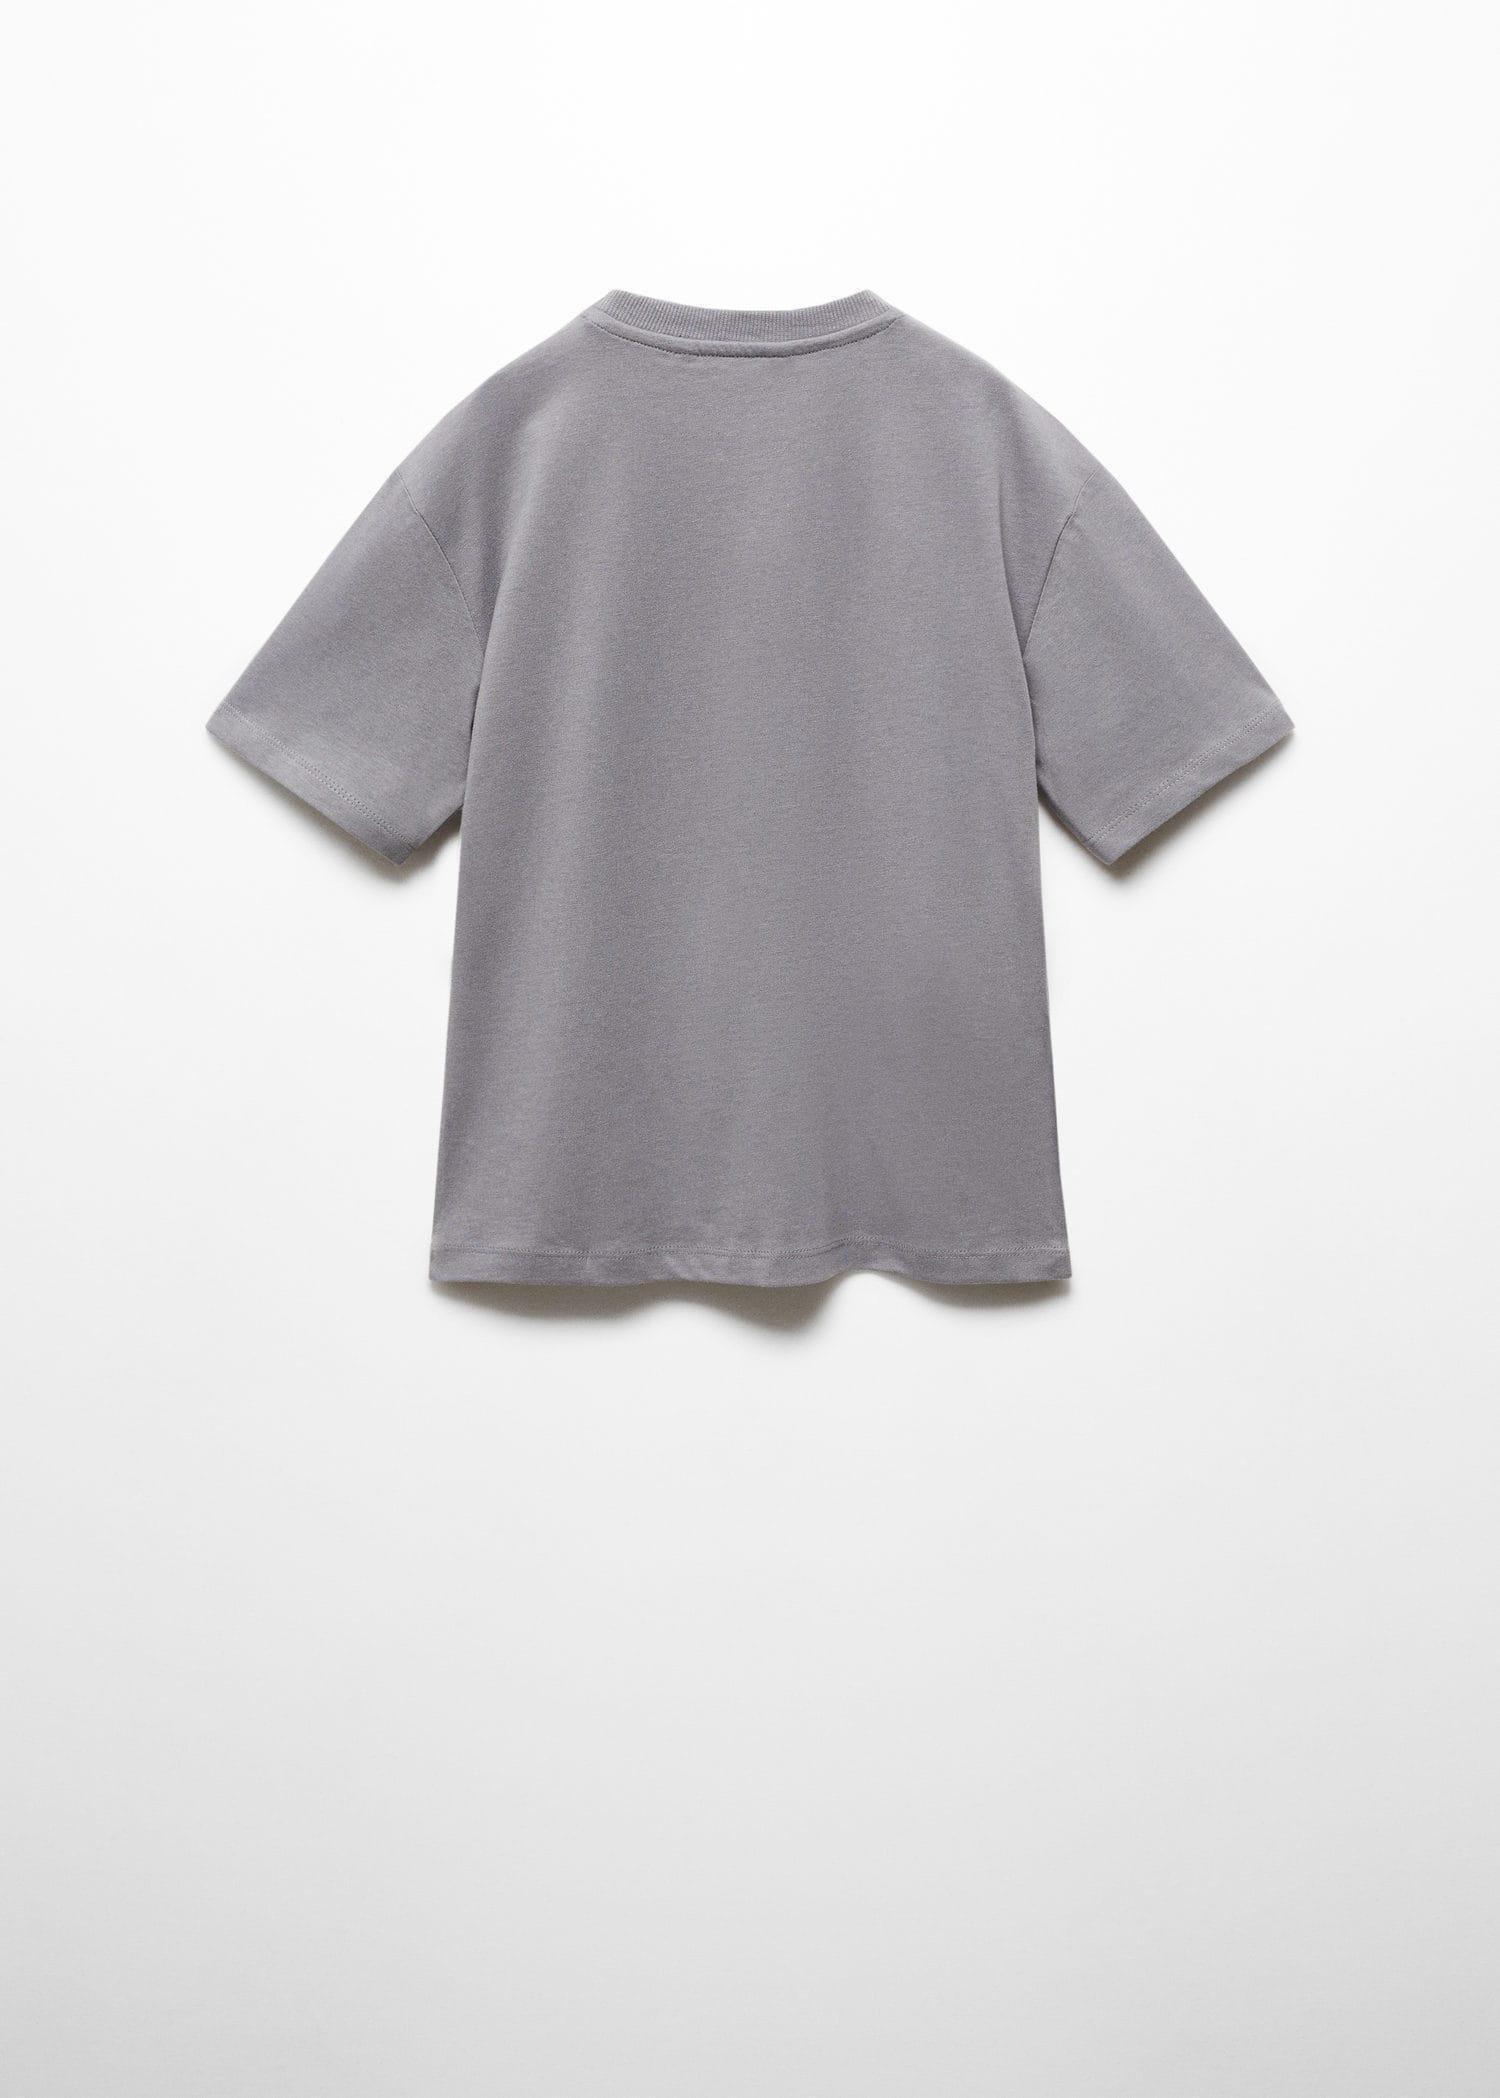 Mango - Grey Surf Printed T-Shirt, Kids Boys